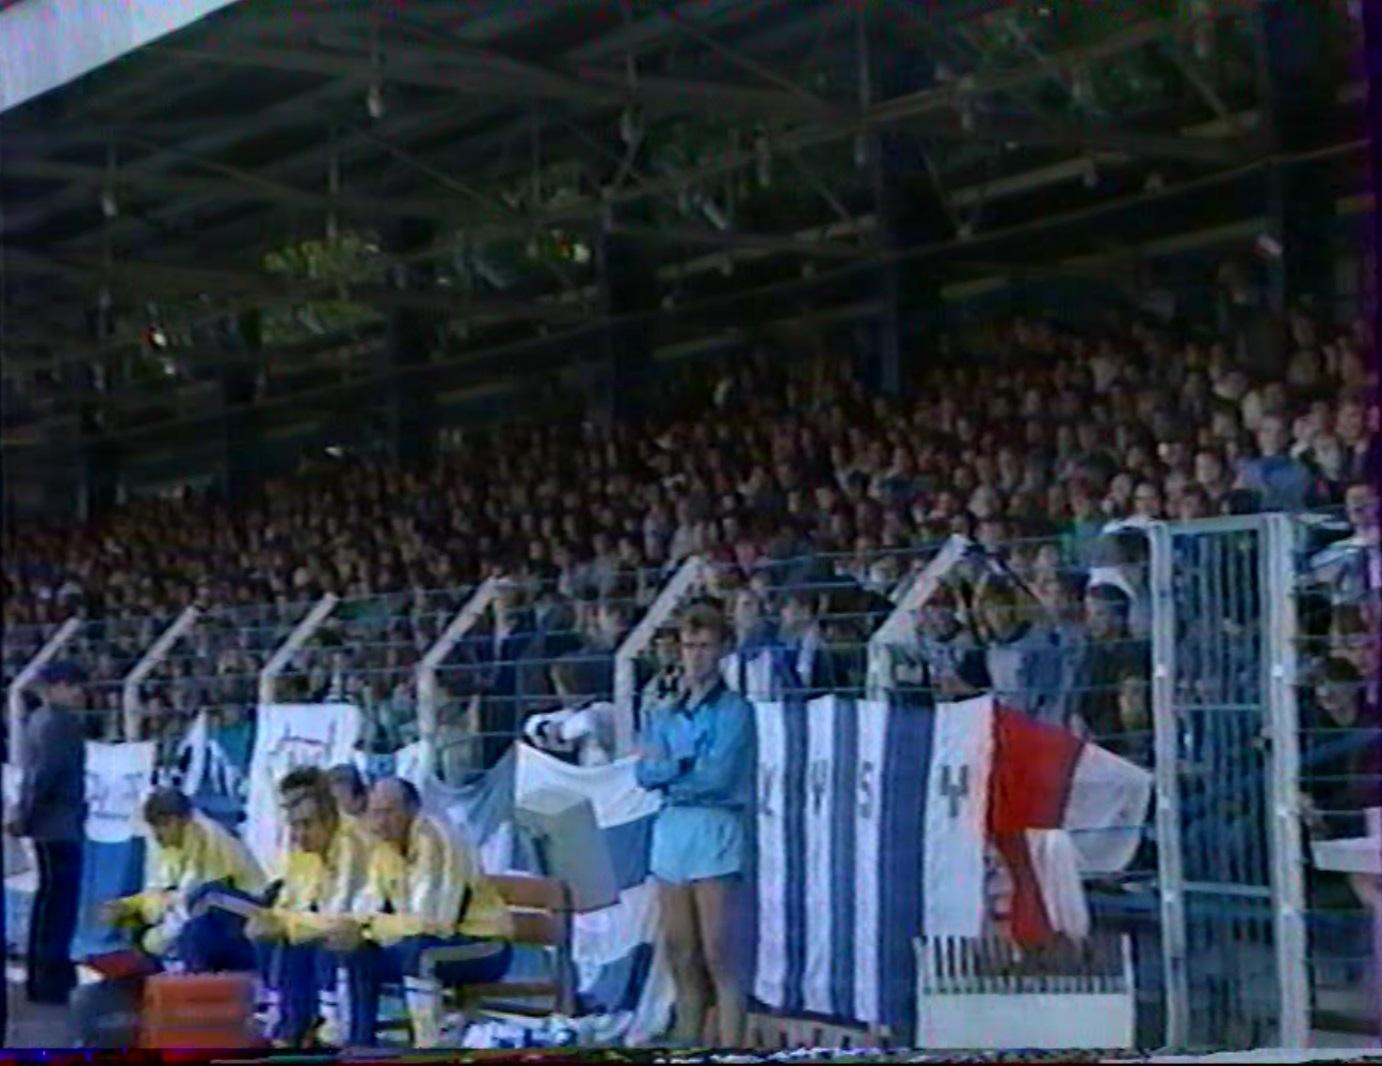 Stadion Bałtyk Gdynia (1991)